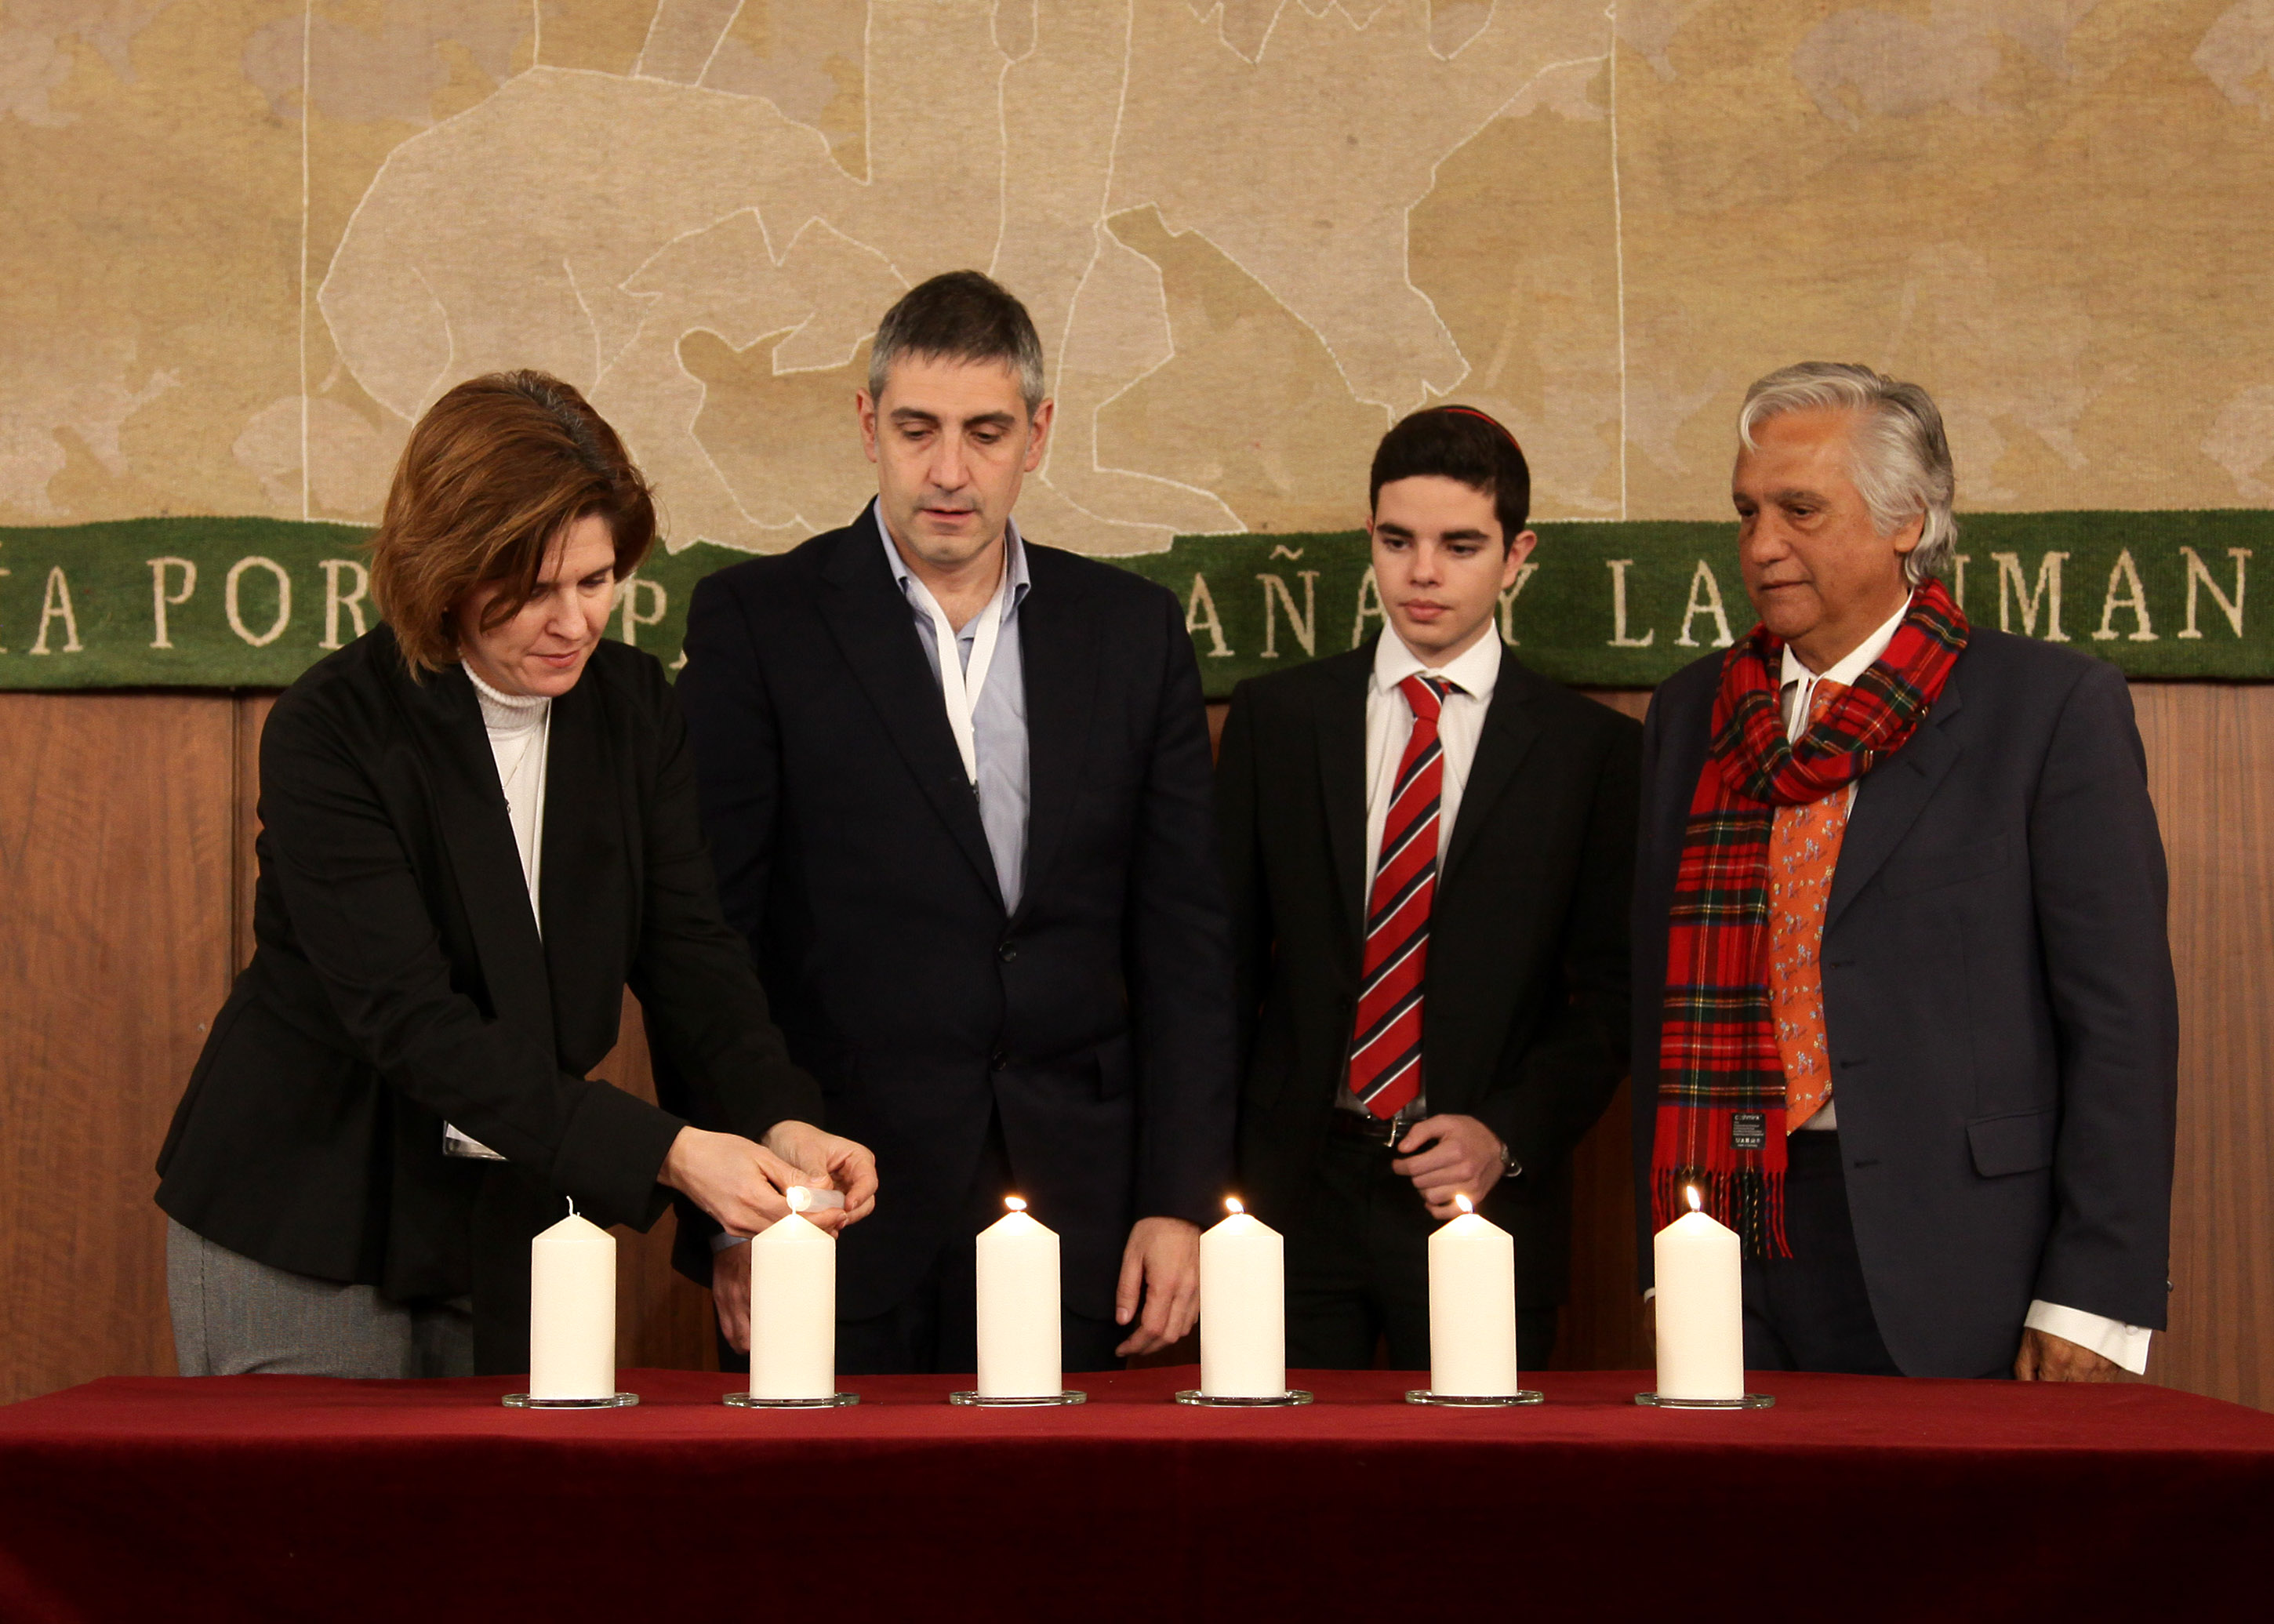 Representantes de distintas comunidades de vctimas del holocausto encendieron seis velas en memoria de los fallecidos